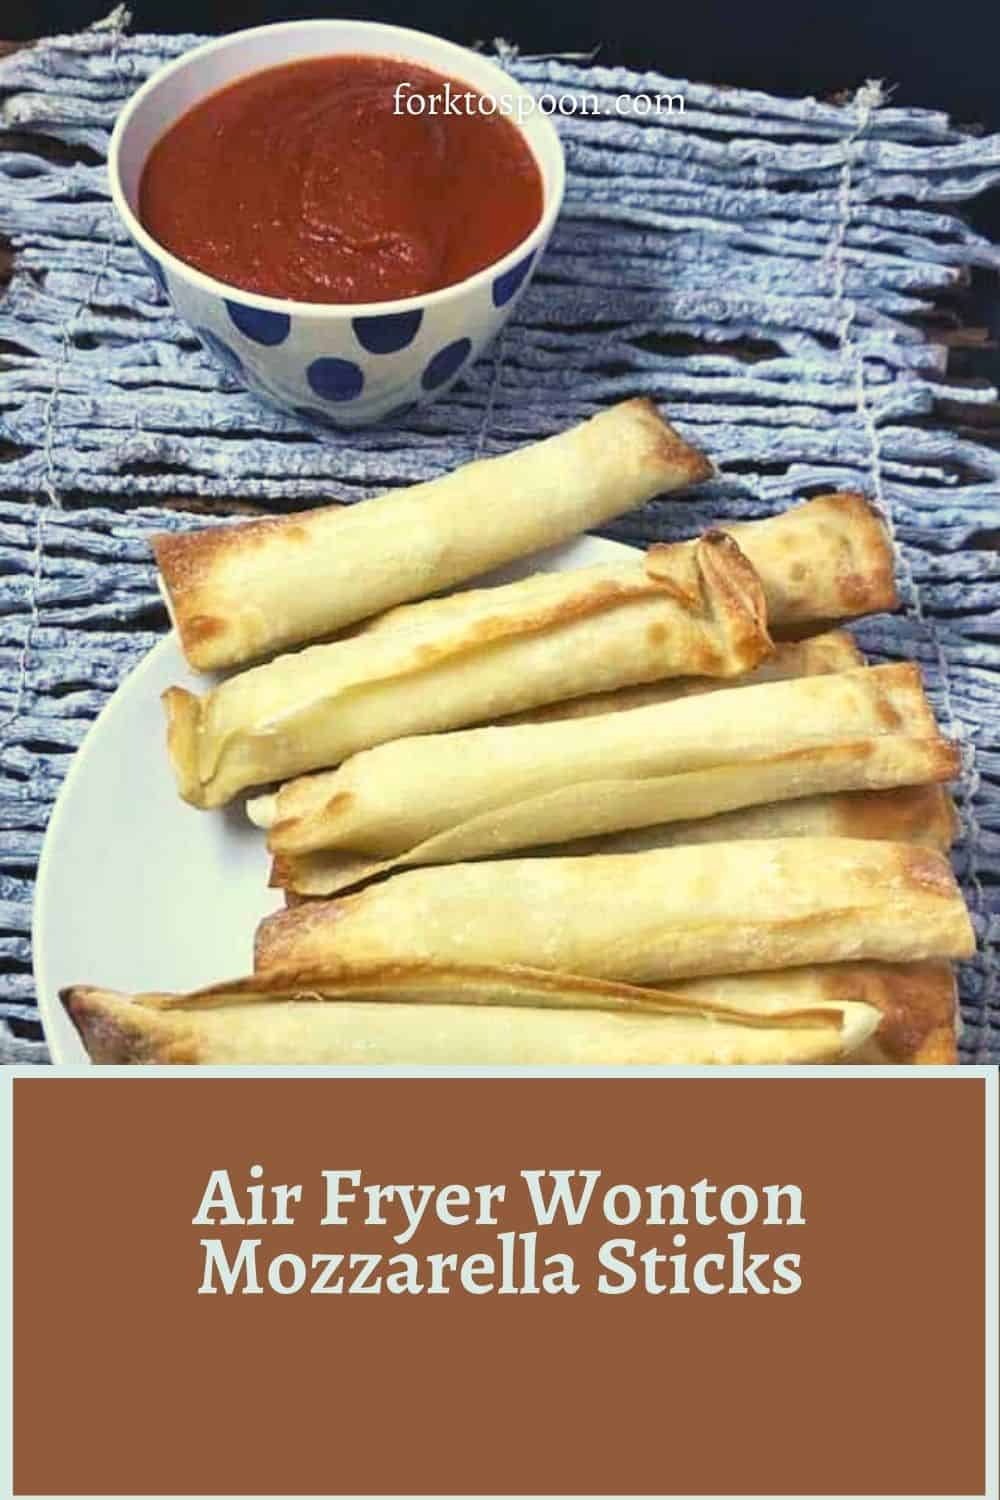 Air Fryer Wonton Mozzarella Sticks